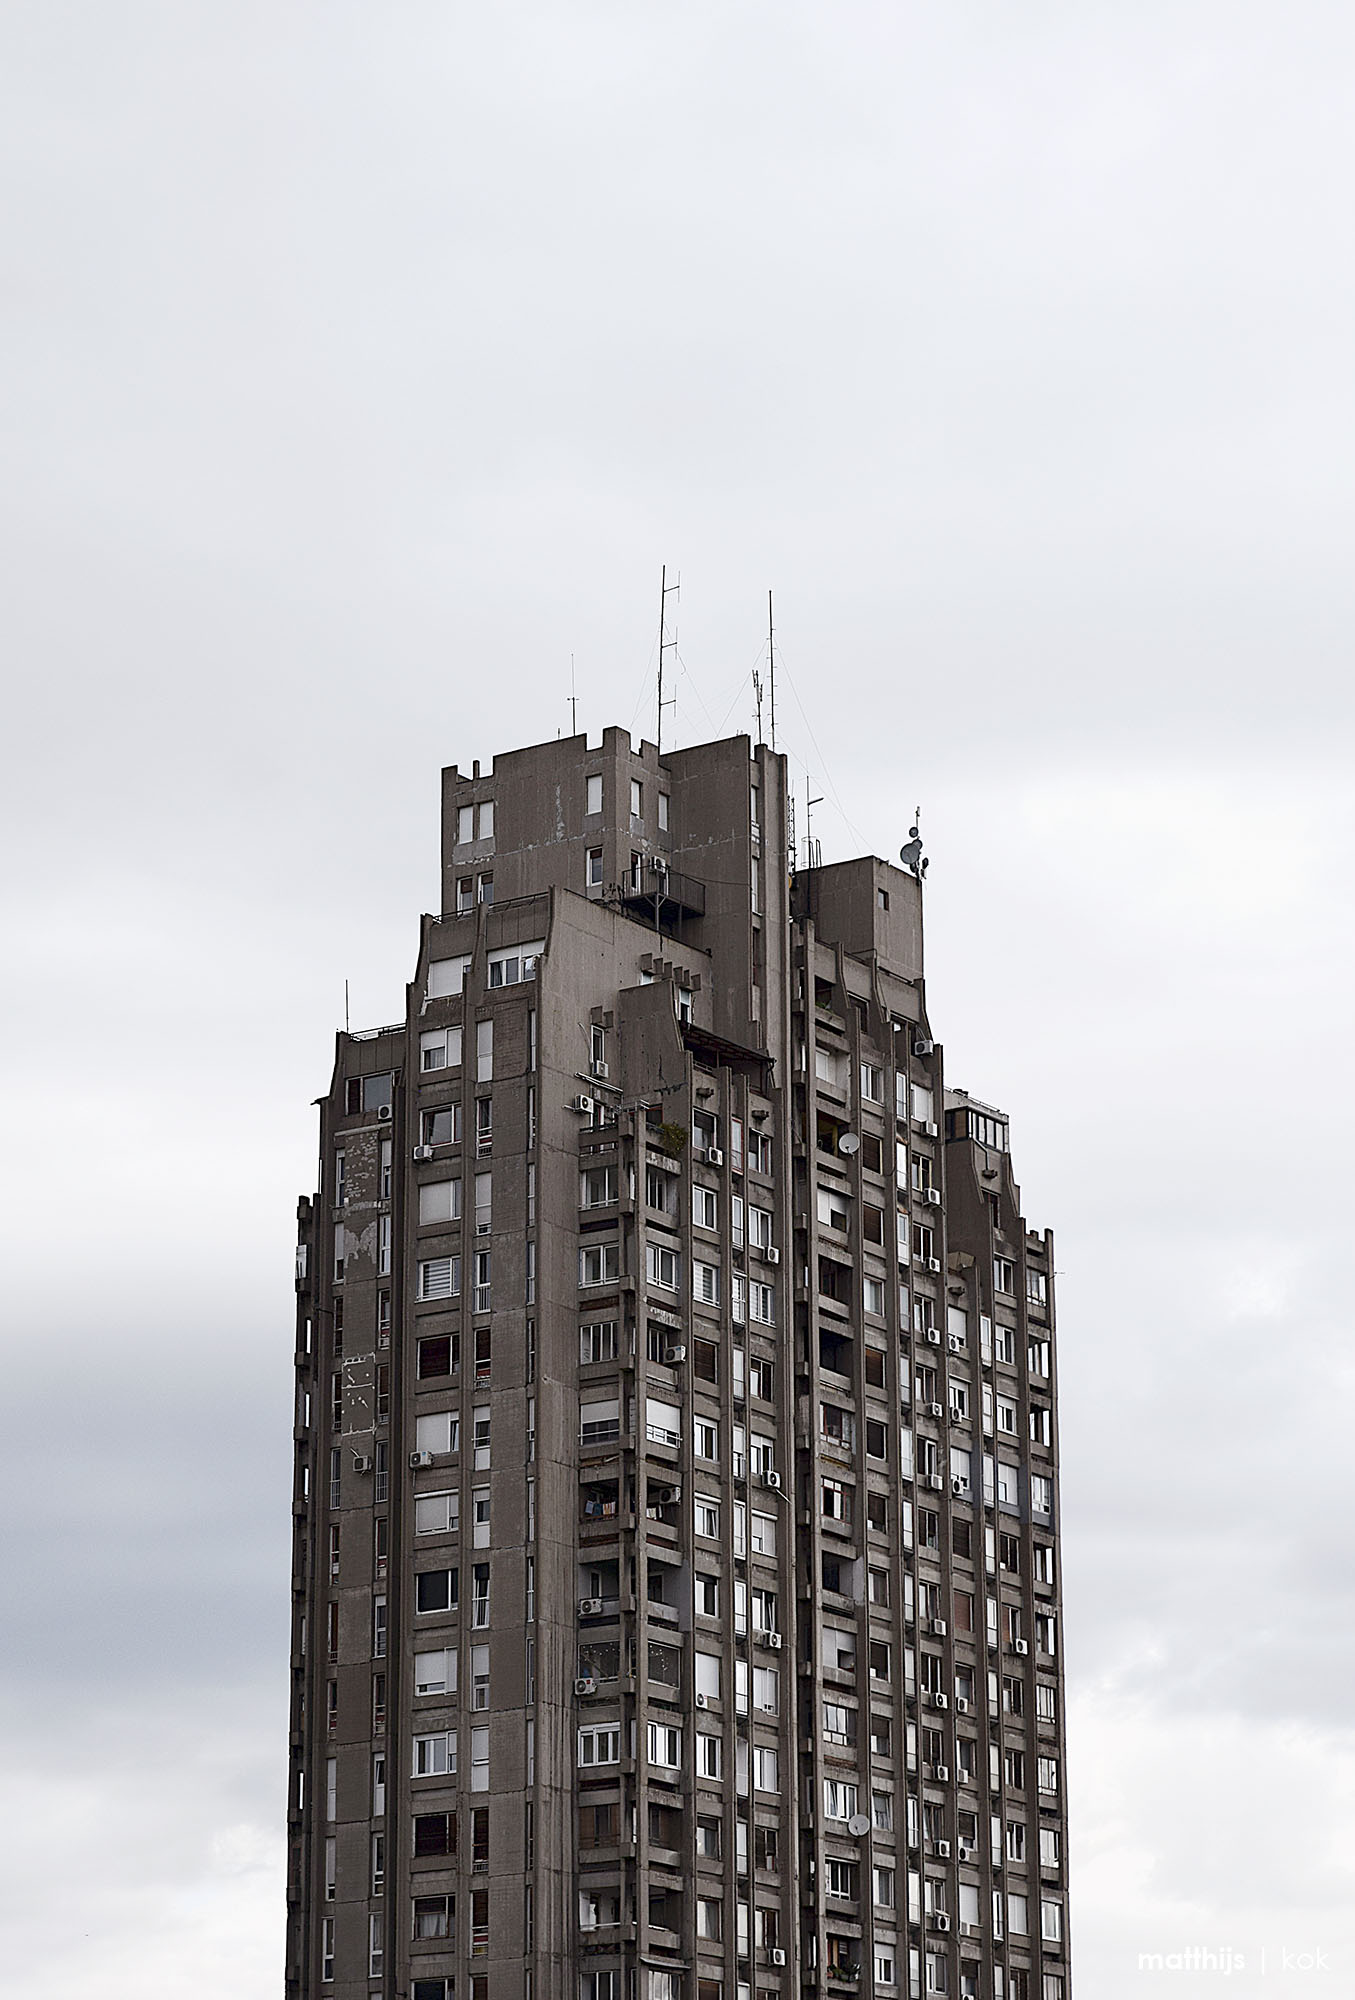 High-rise tower of Blok 23, Novi Beograd, Serbia | Photo by Matthijs Kok